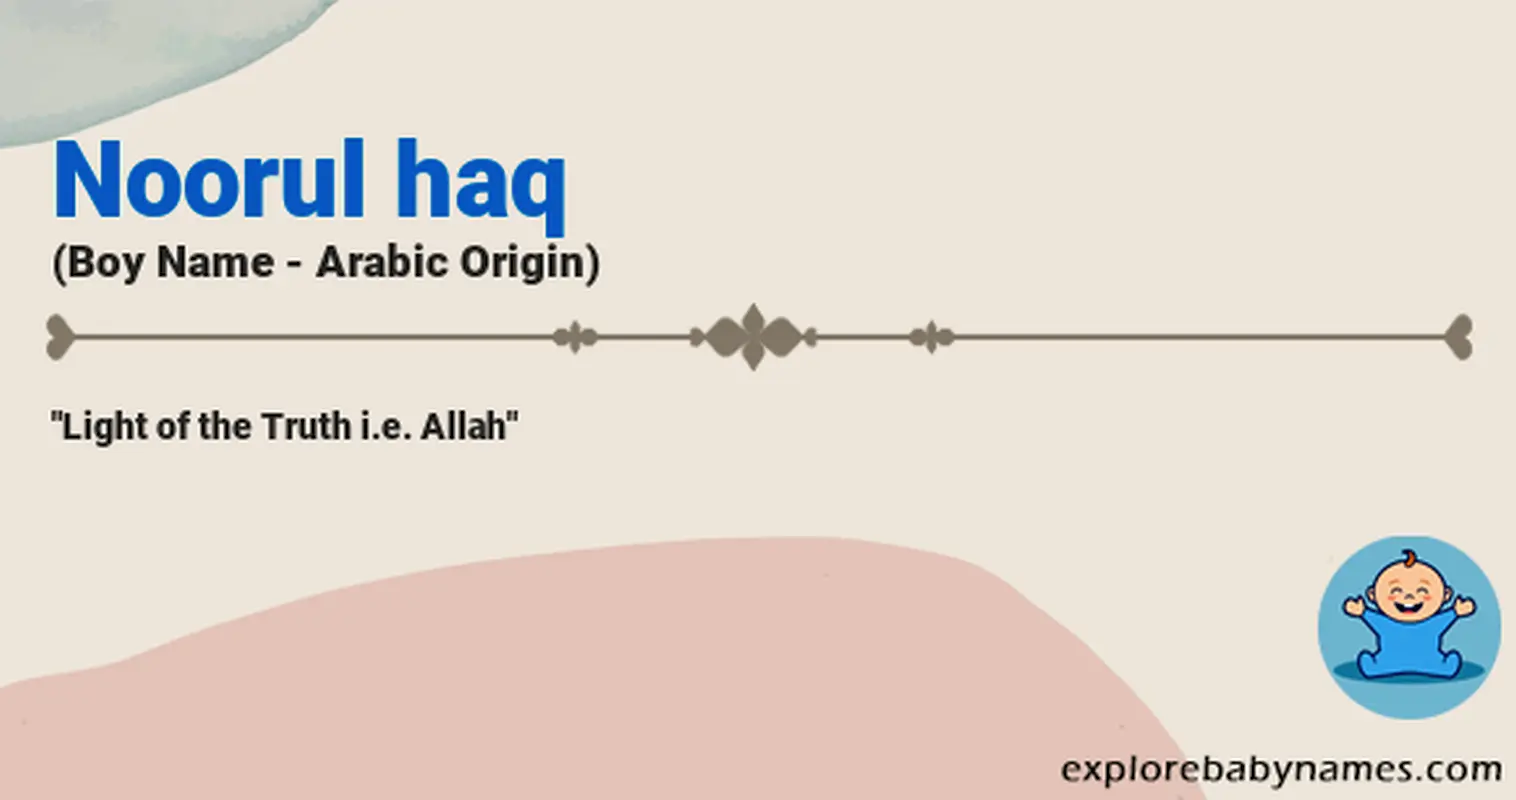 Meaning of Noorul haq